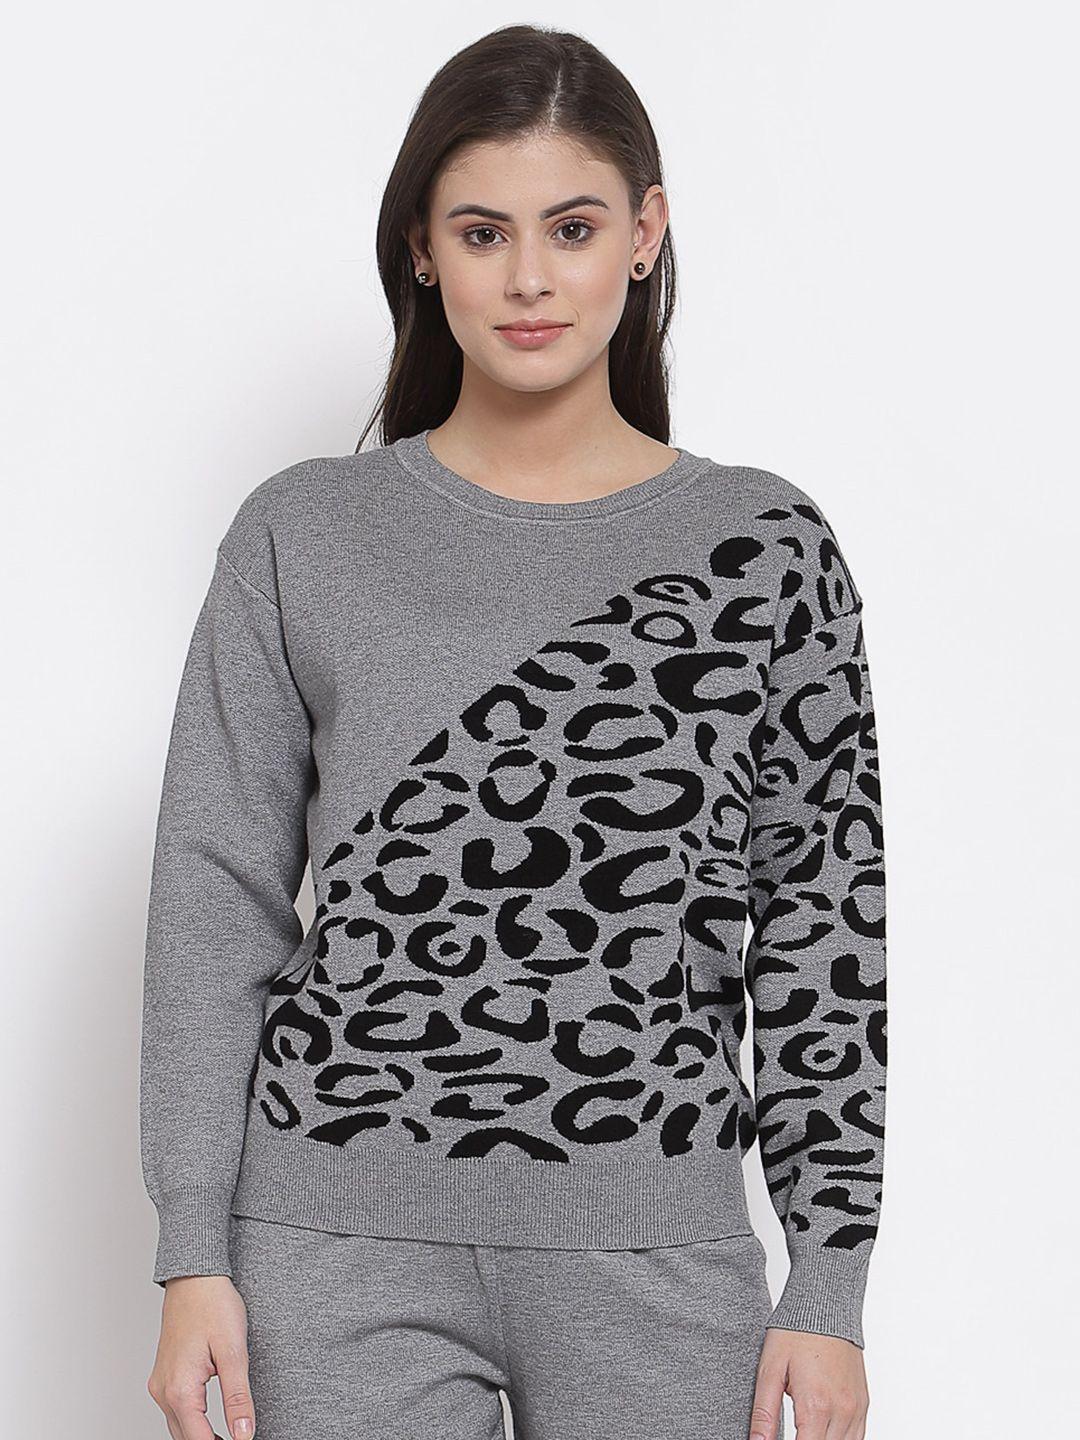 mafadeny-women-animal-printed-pullover